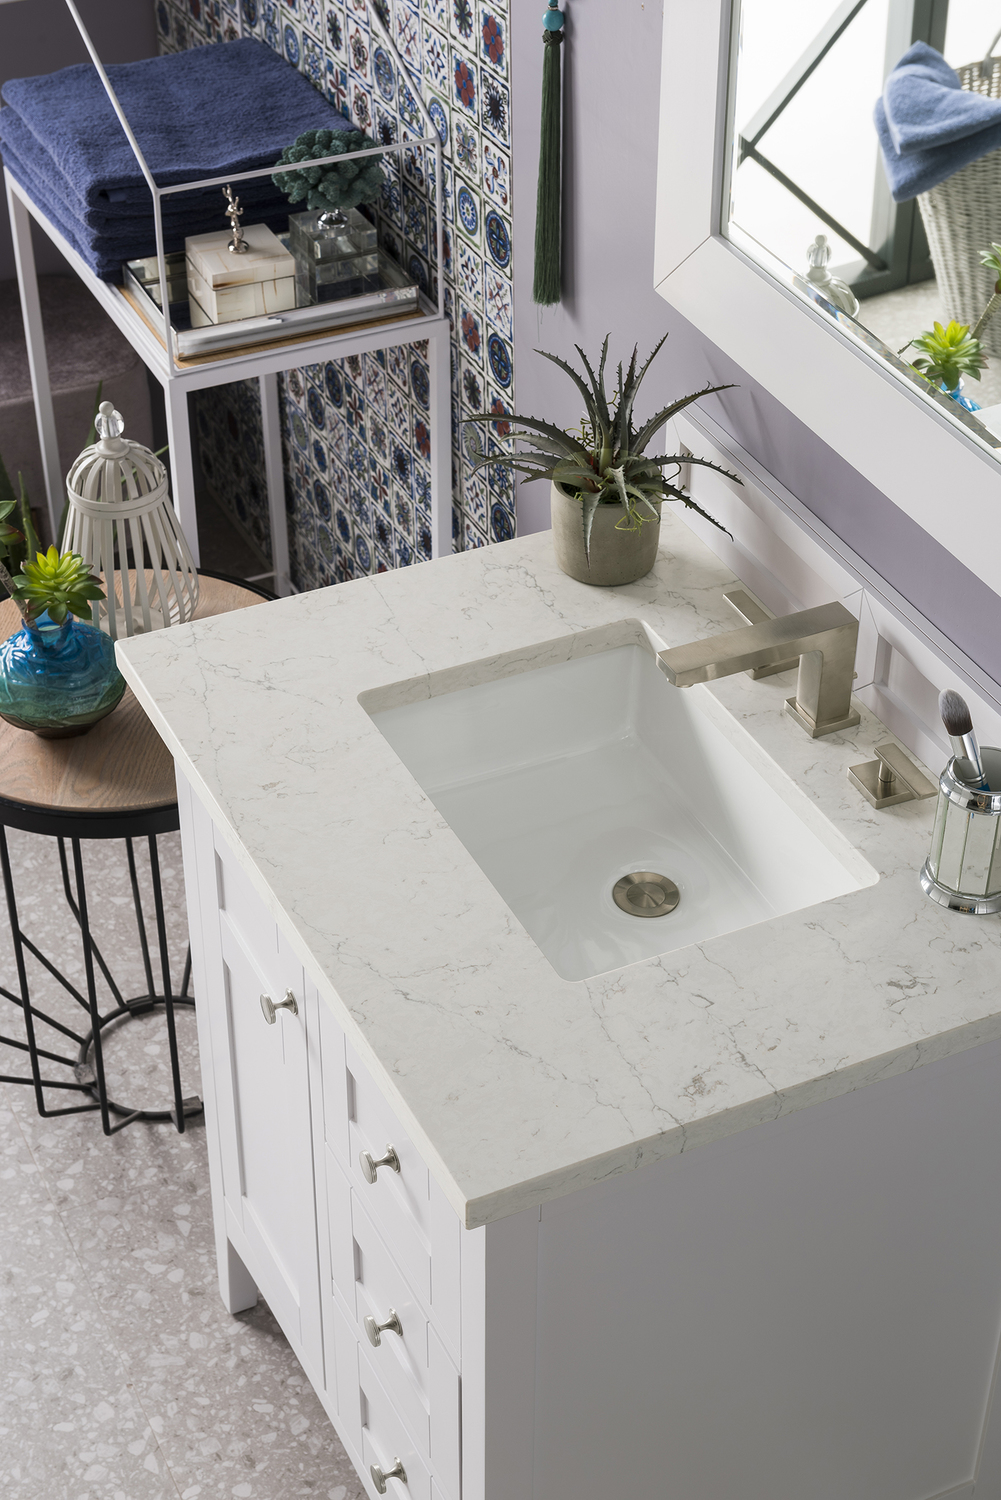  James Martin Vanity Bathroom Vanities Bright White Transitional